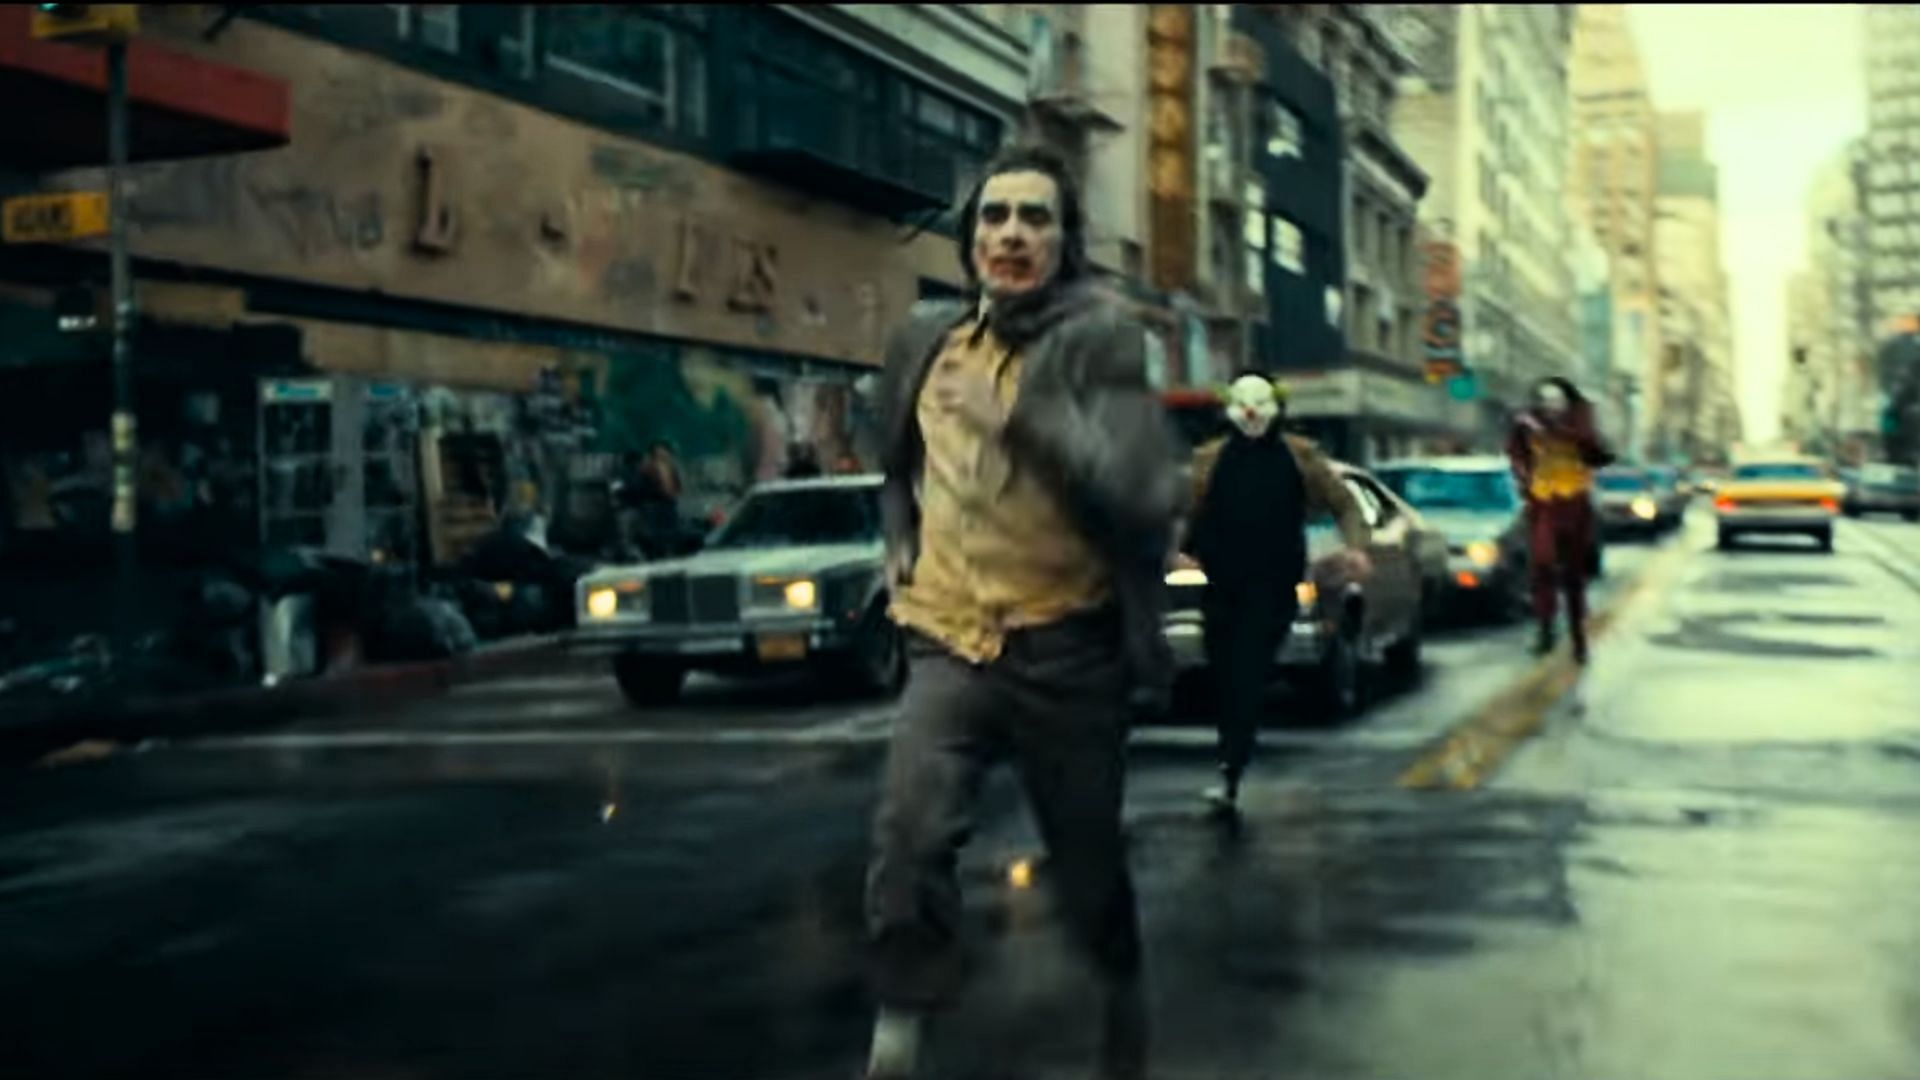 Two jokers are shown chasing Arthur Fleck (Image via Warner Bros.)